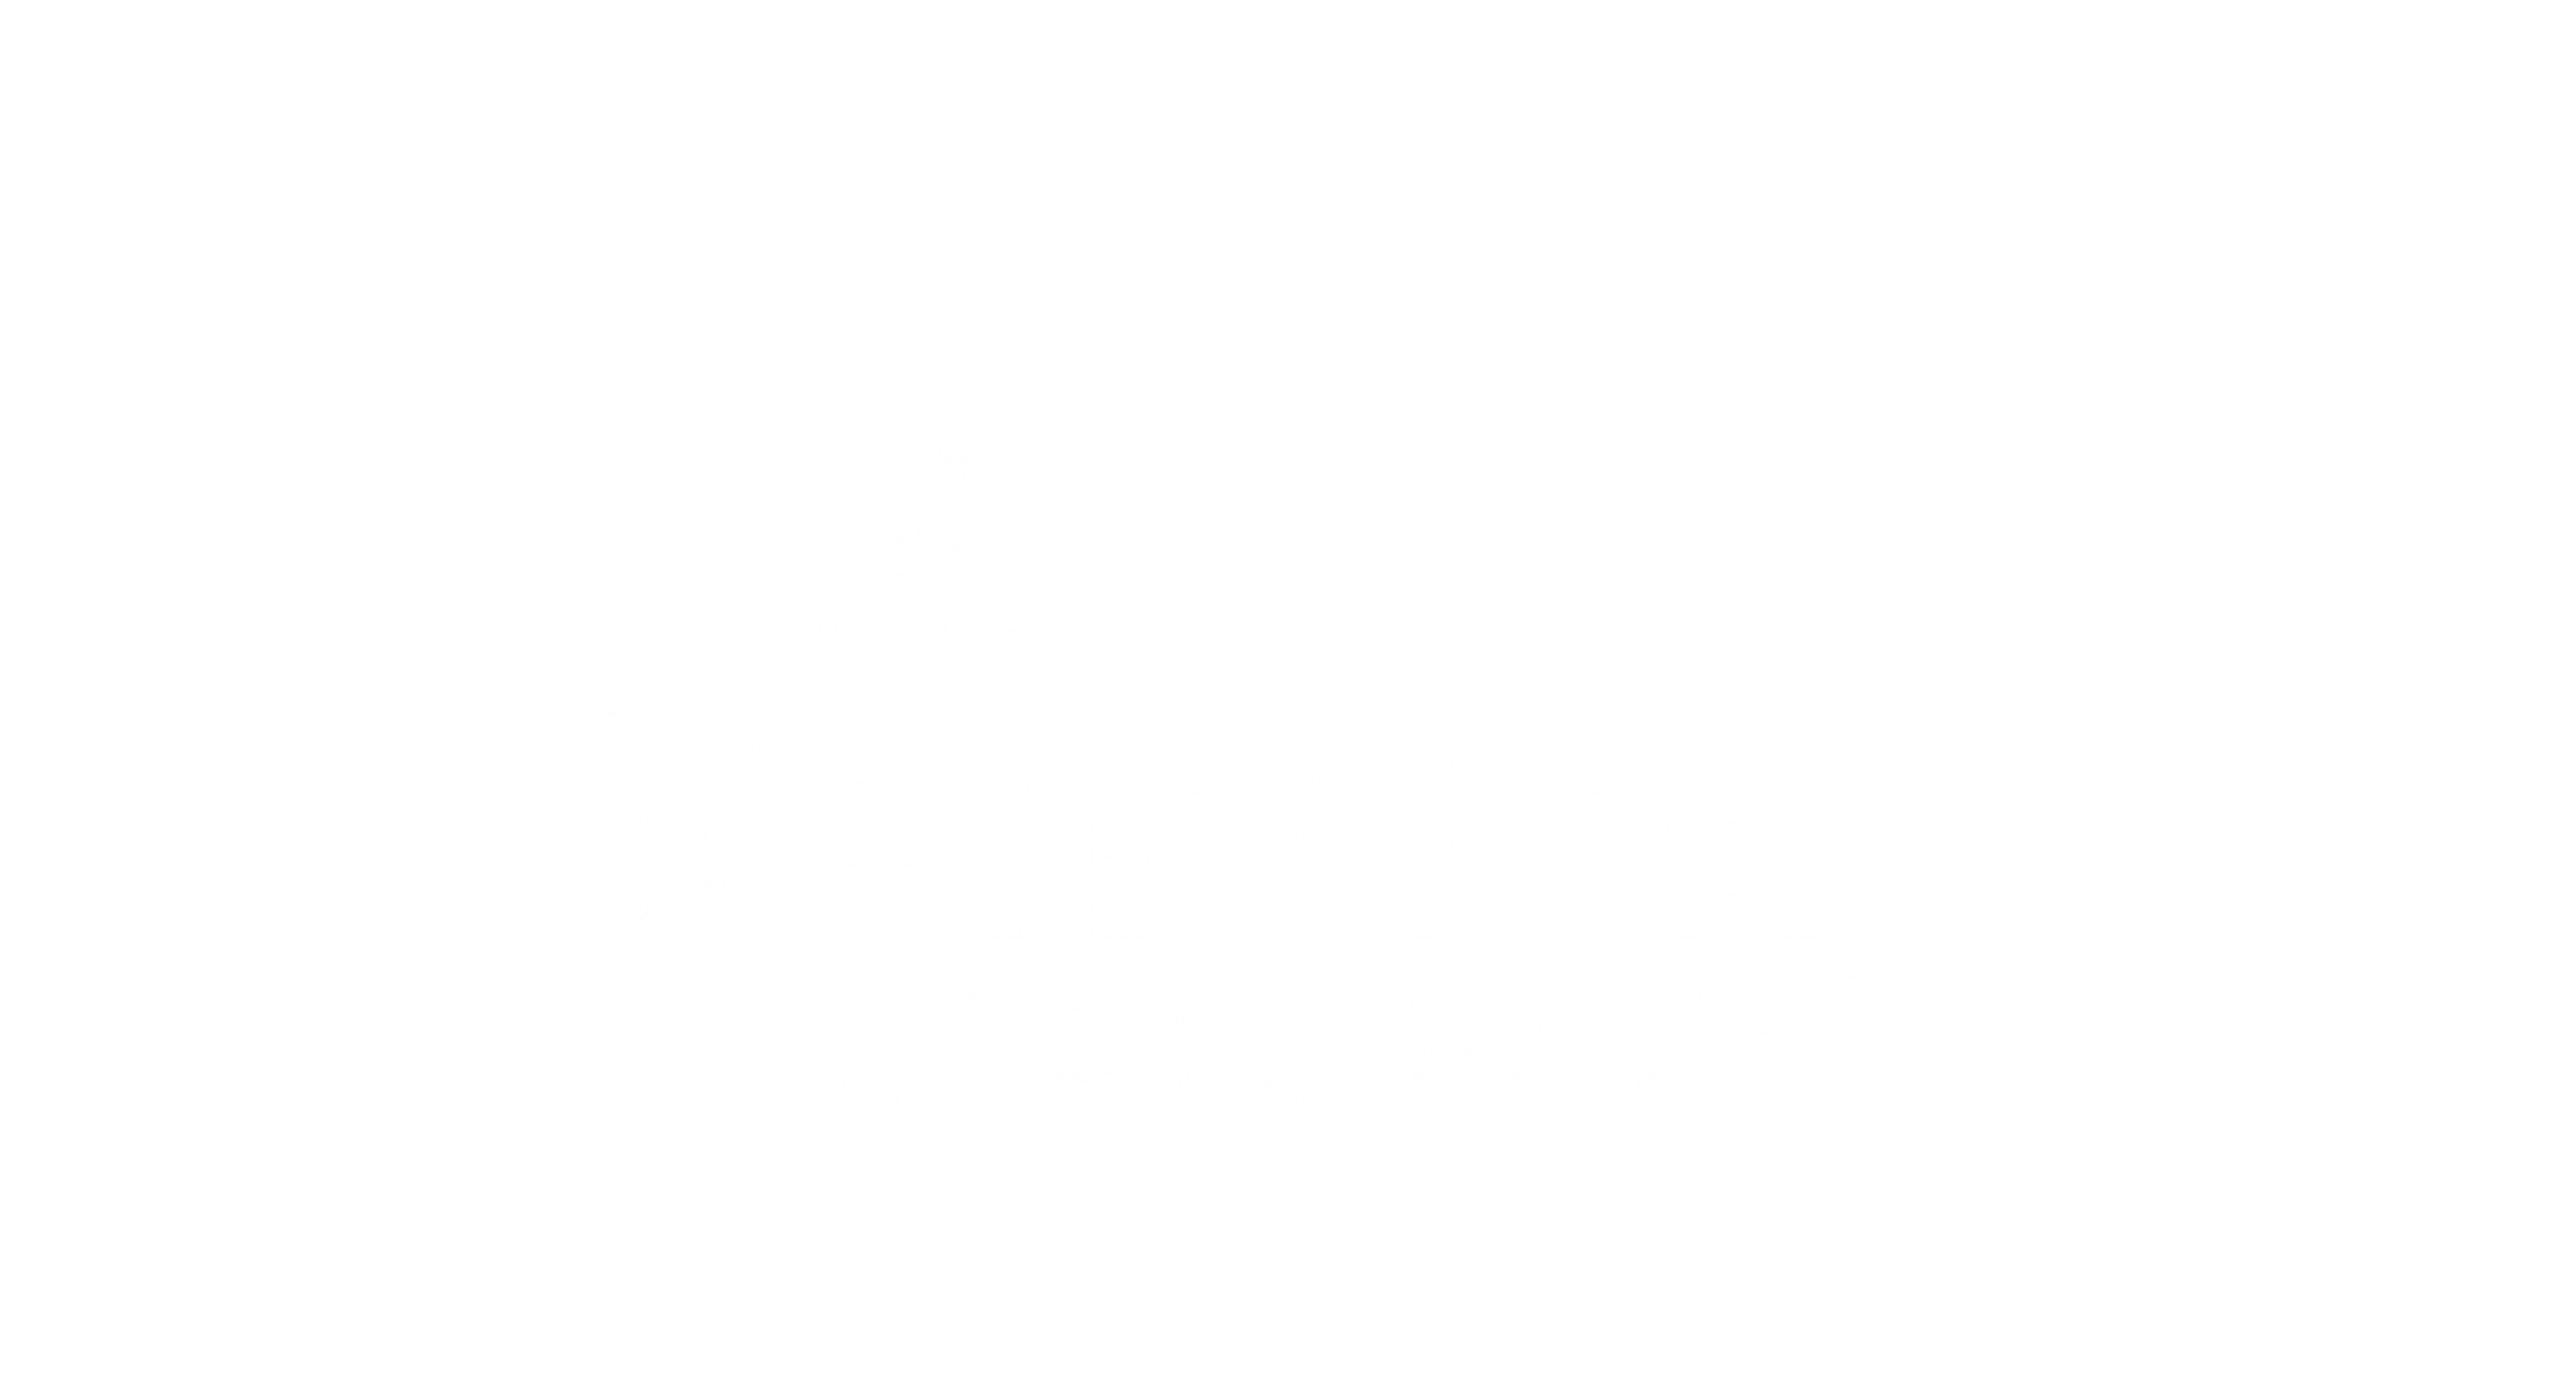 Blue Ribbon - Kentucky State Fair 2018